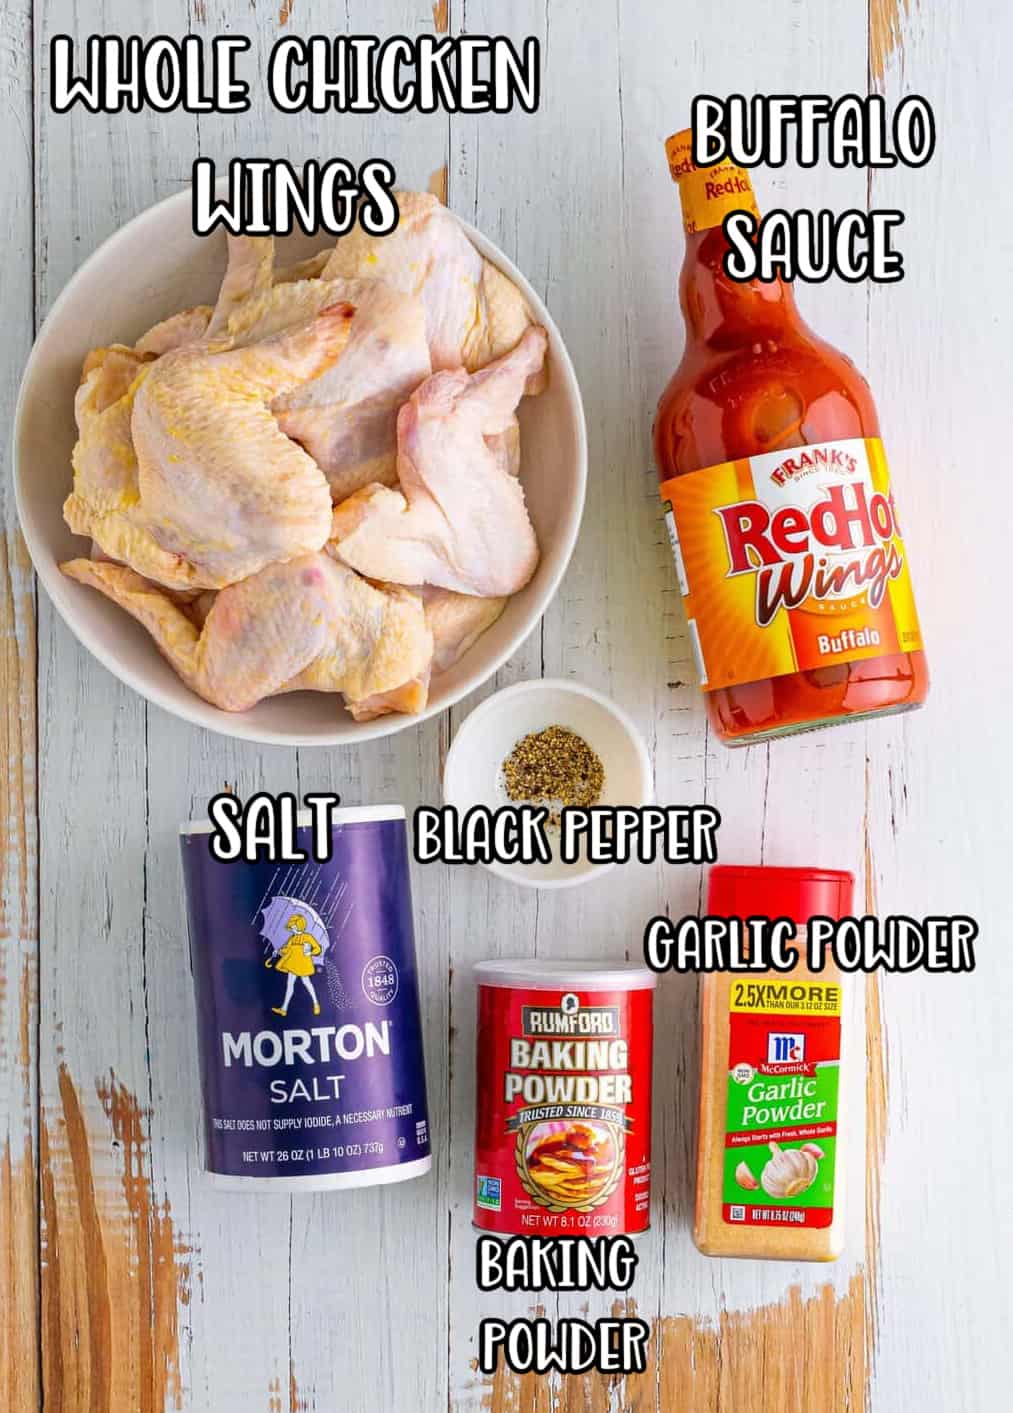 Chicken wings, Frank's Buffalo sauce, salt, pepper, baking powder, and garlic powder. 